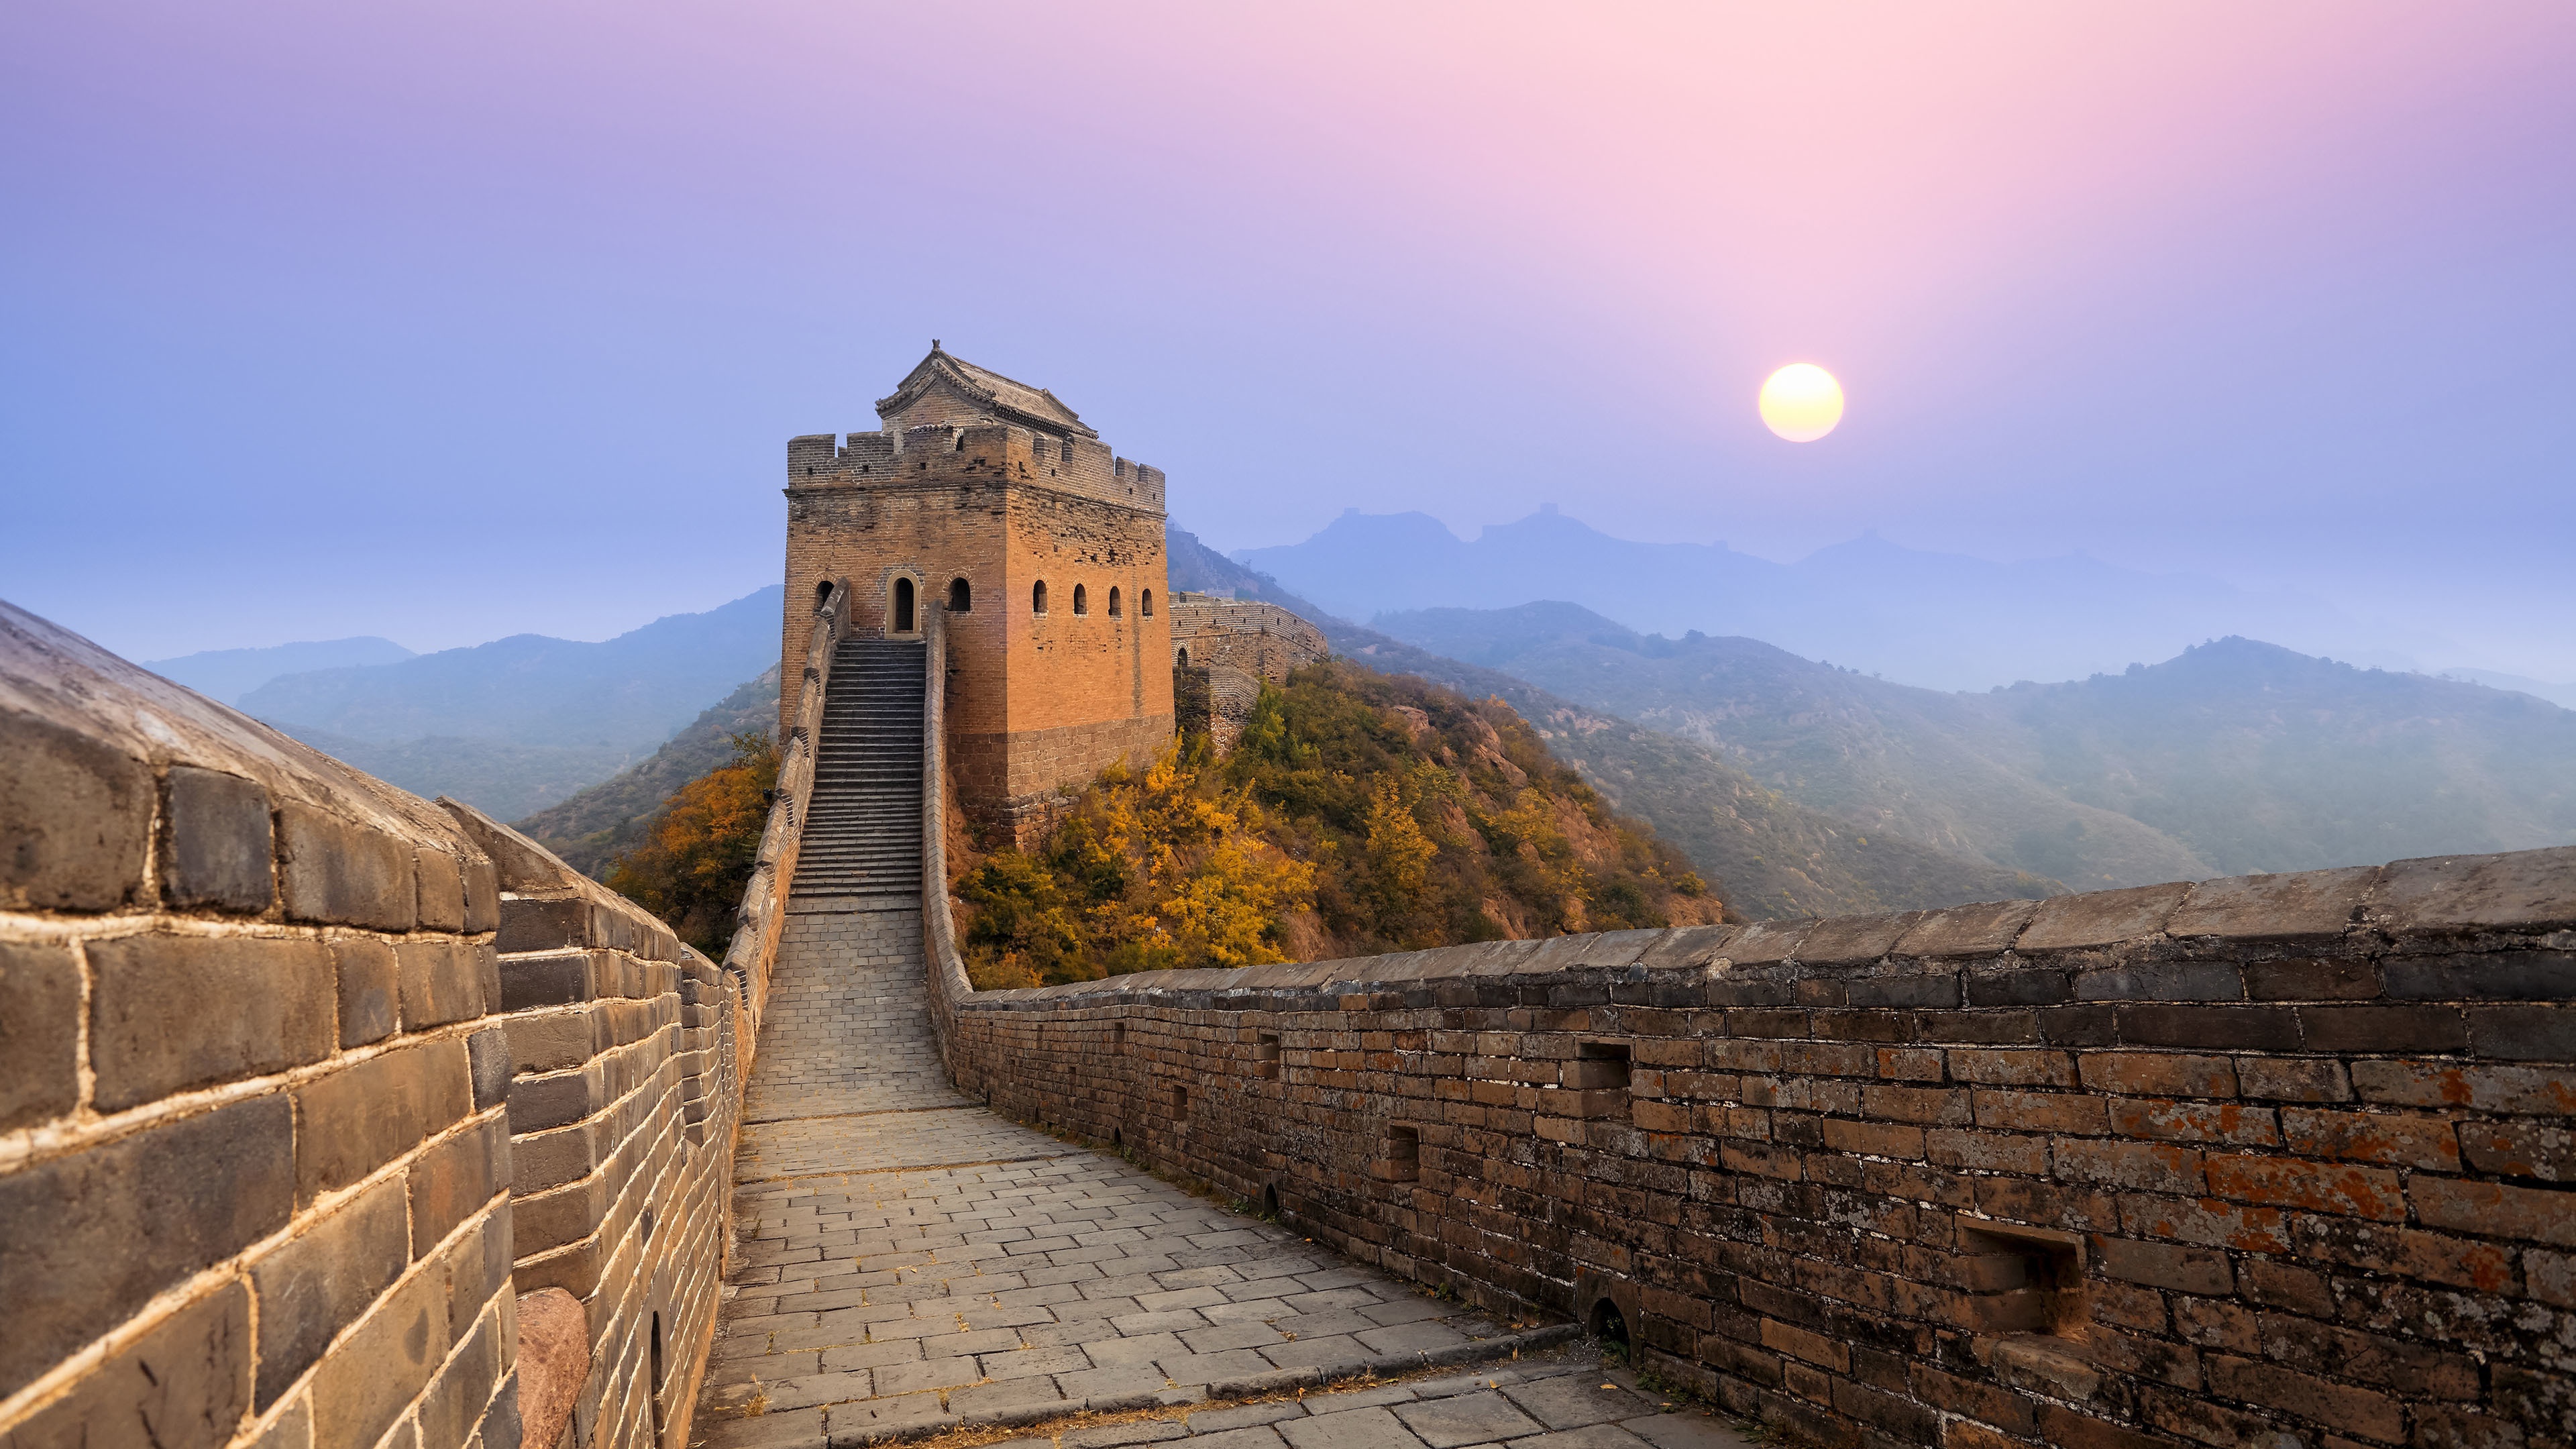 man made, great wall of china, china, landscape, monuments